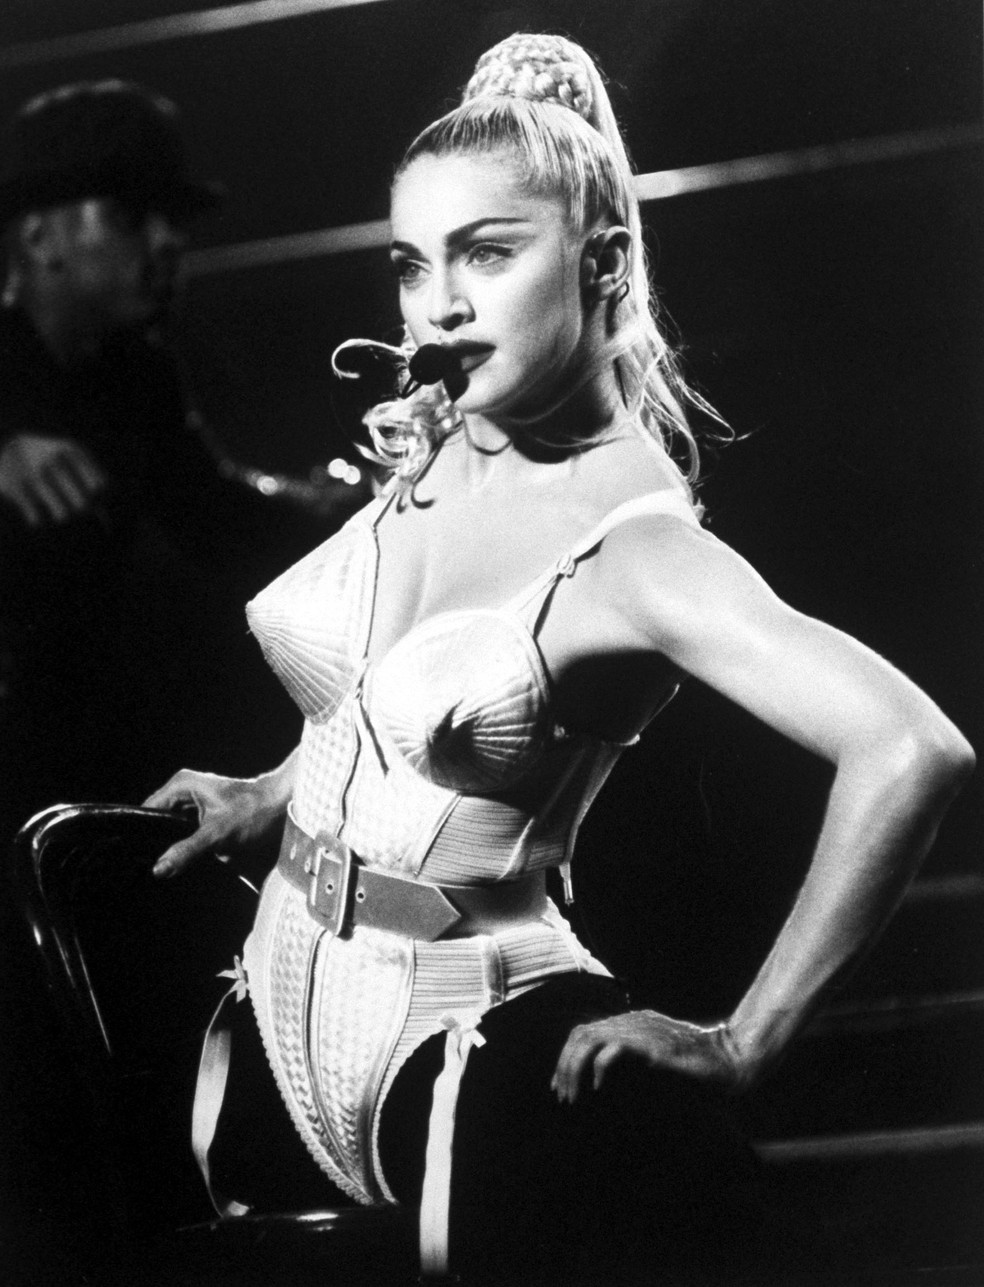 A cantora Madonna com espartilho pontiagudo do estilista Jean-Paul Gaultier enquanto apresentava seu show Blonde Ambition. — Foto: Time Life Pictures/DMI/The LIFE Picture Collection/Getty Images